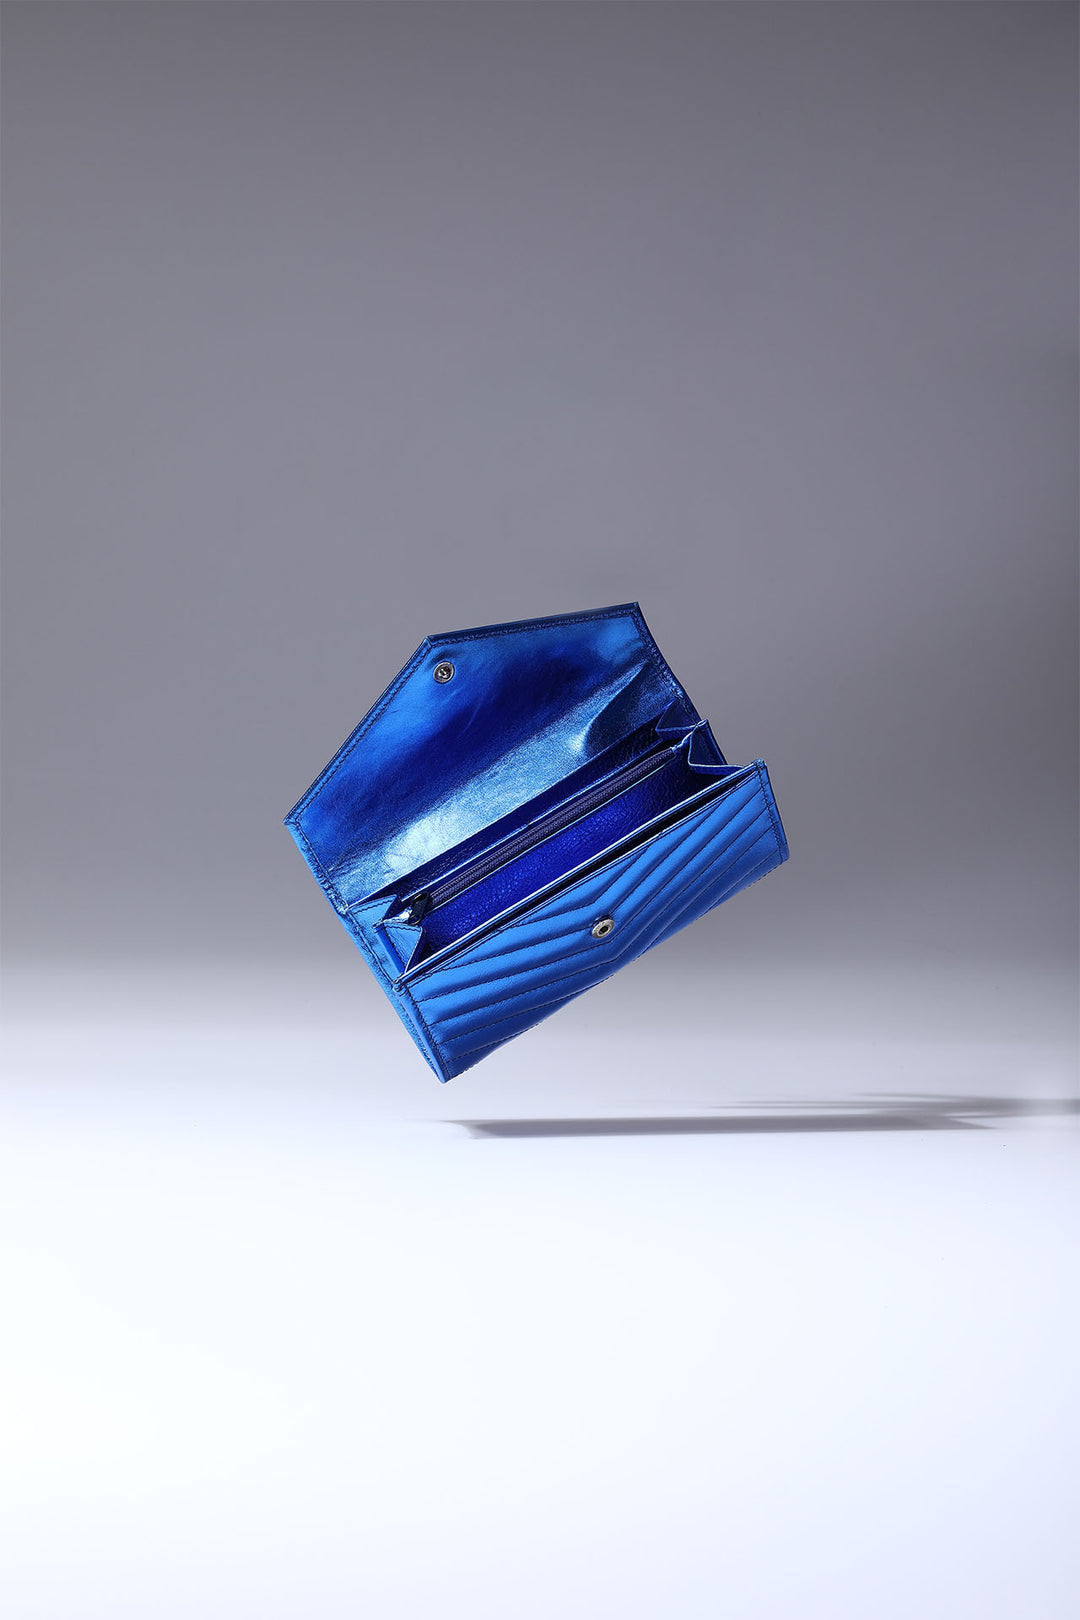 M Wallet Metallic Blue